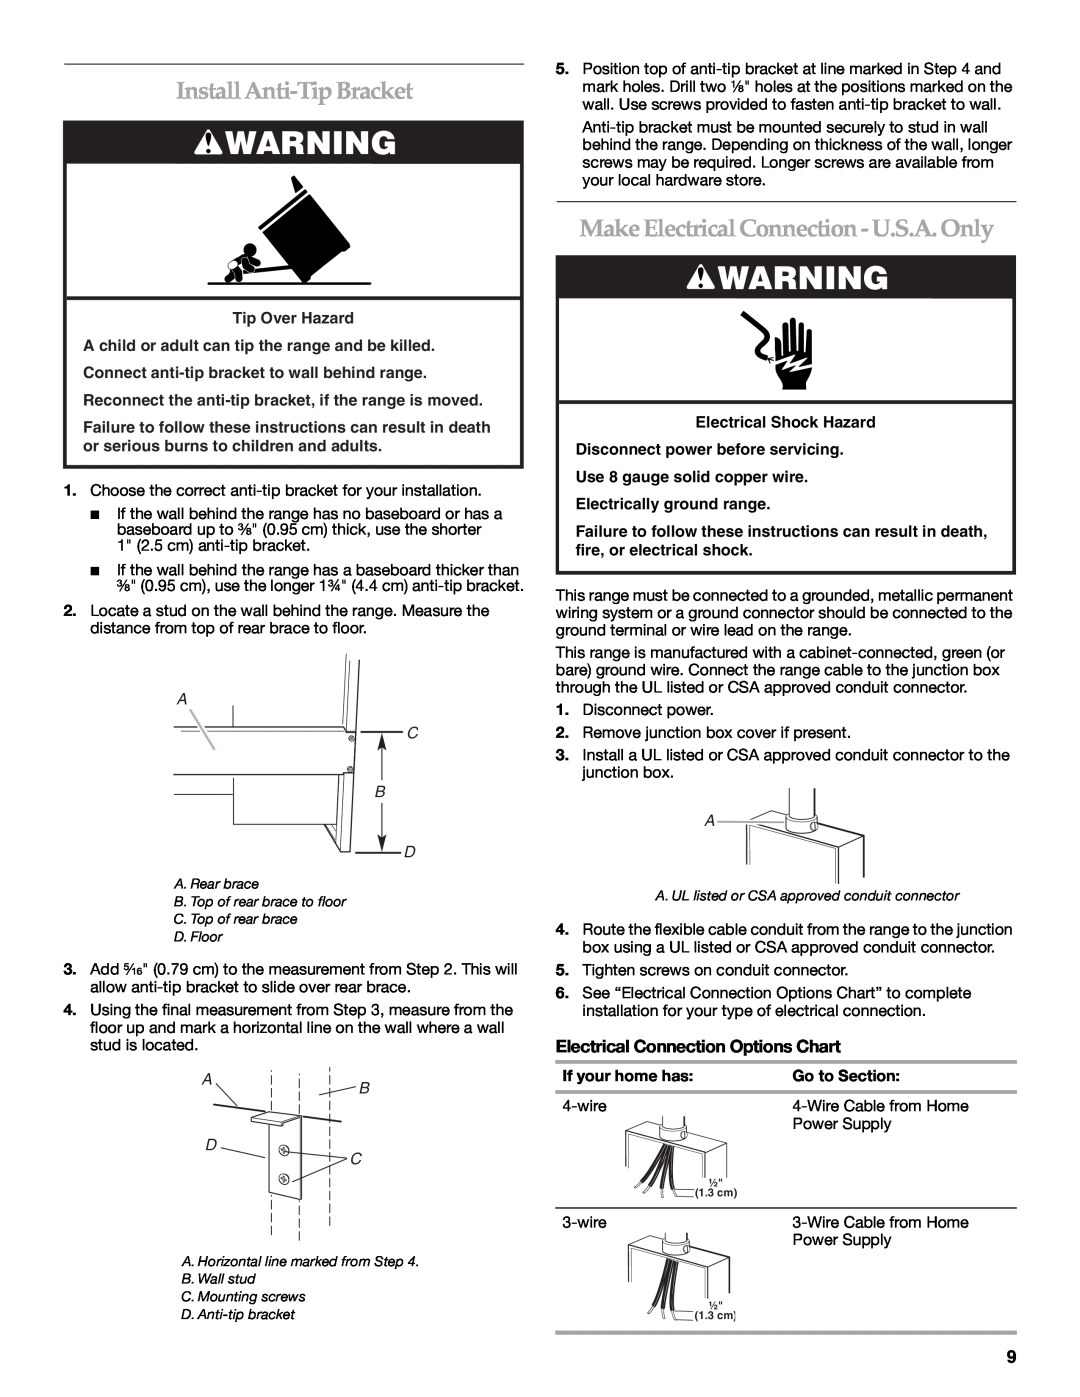 KitchenAid 9759536B Install Anti-Tip Bracket, Make Electrical Connection - U.S.A. Only, A C B D, A B D C, If your home has 